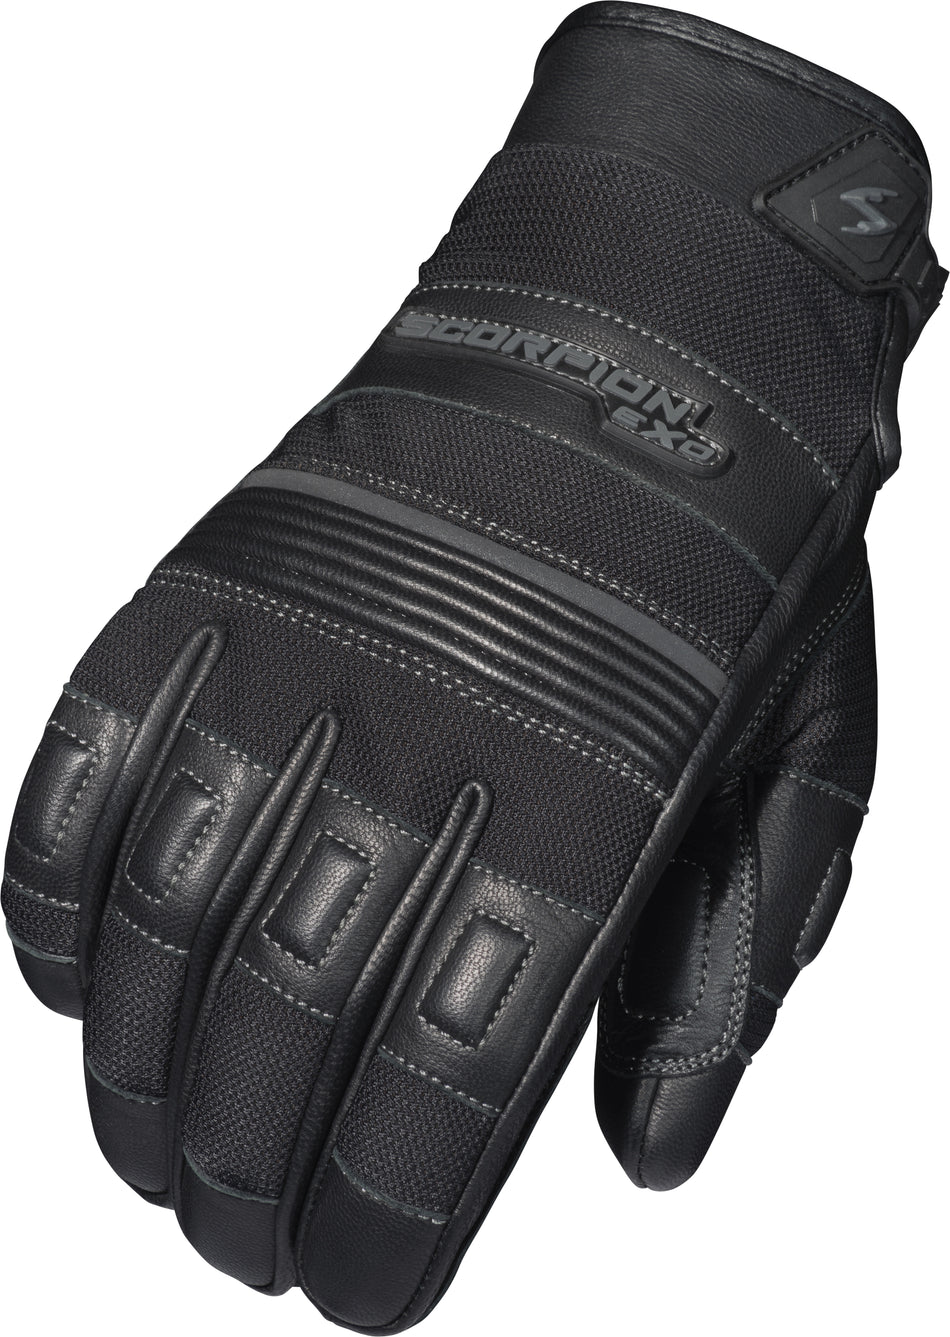 SCORPION EXO Abrams Gloves Black 3x G35-038